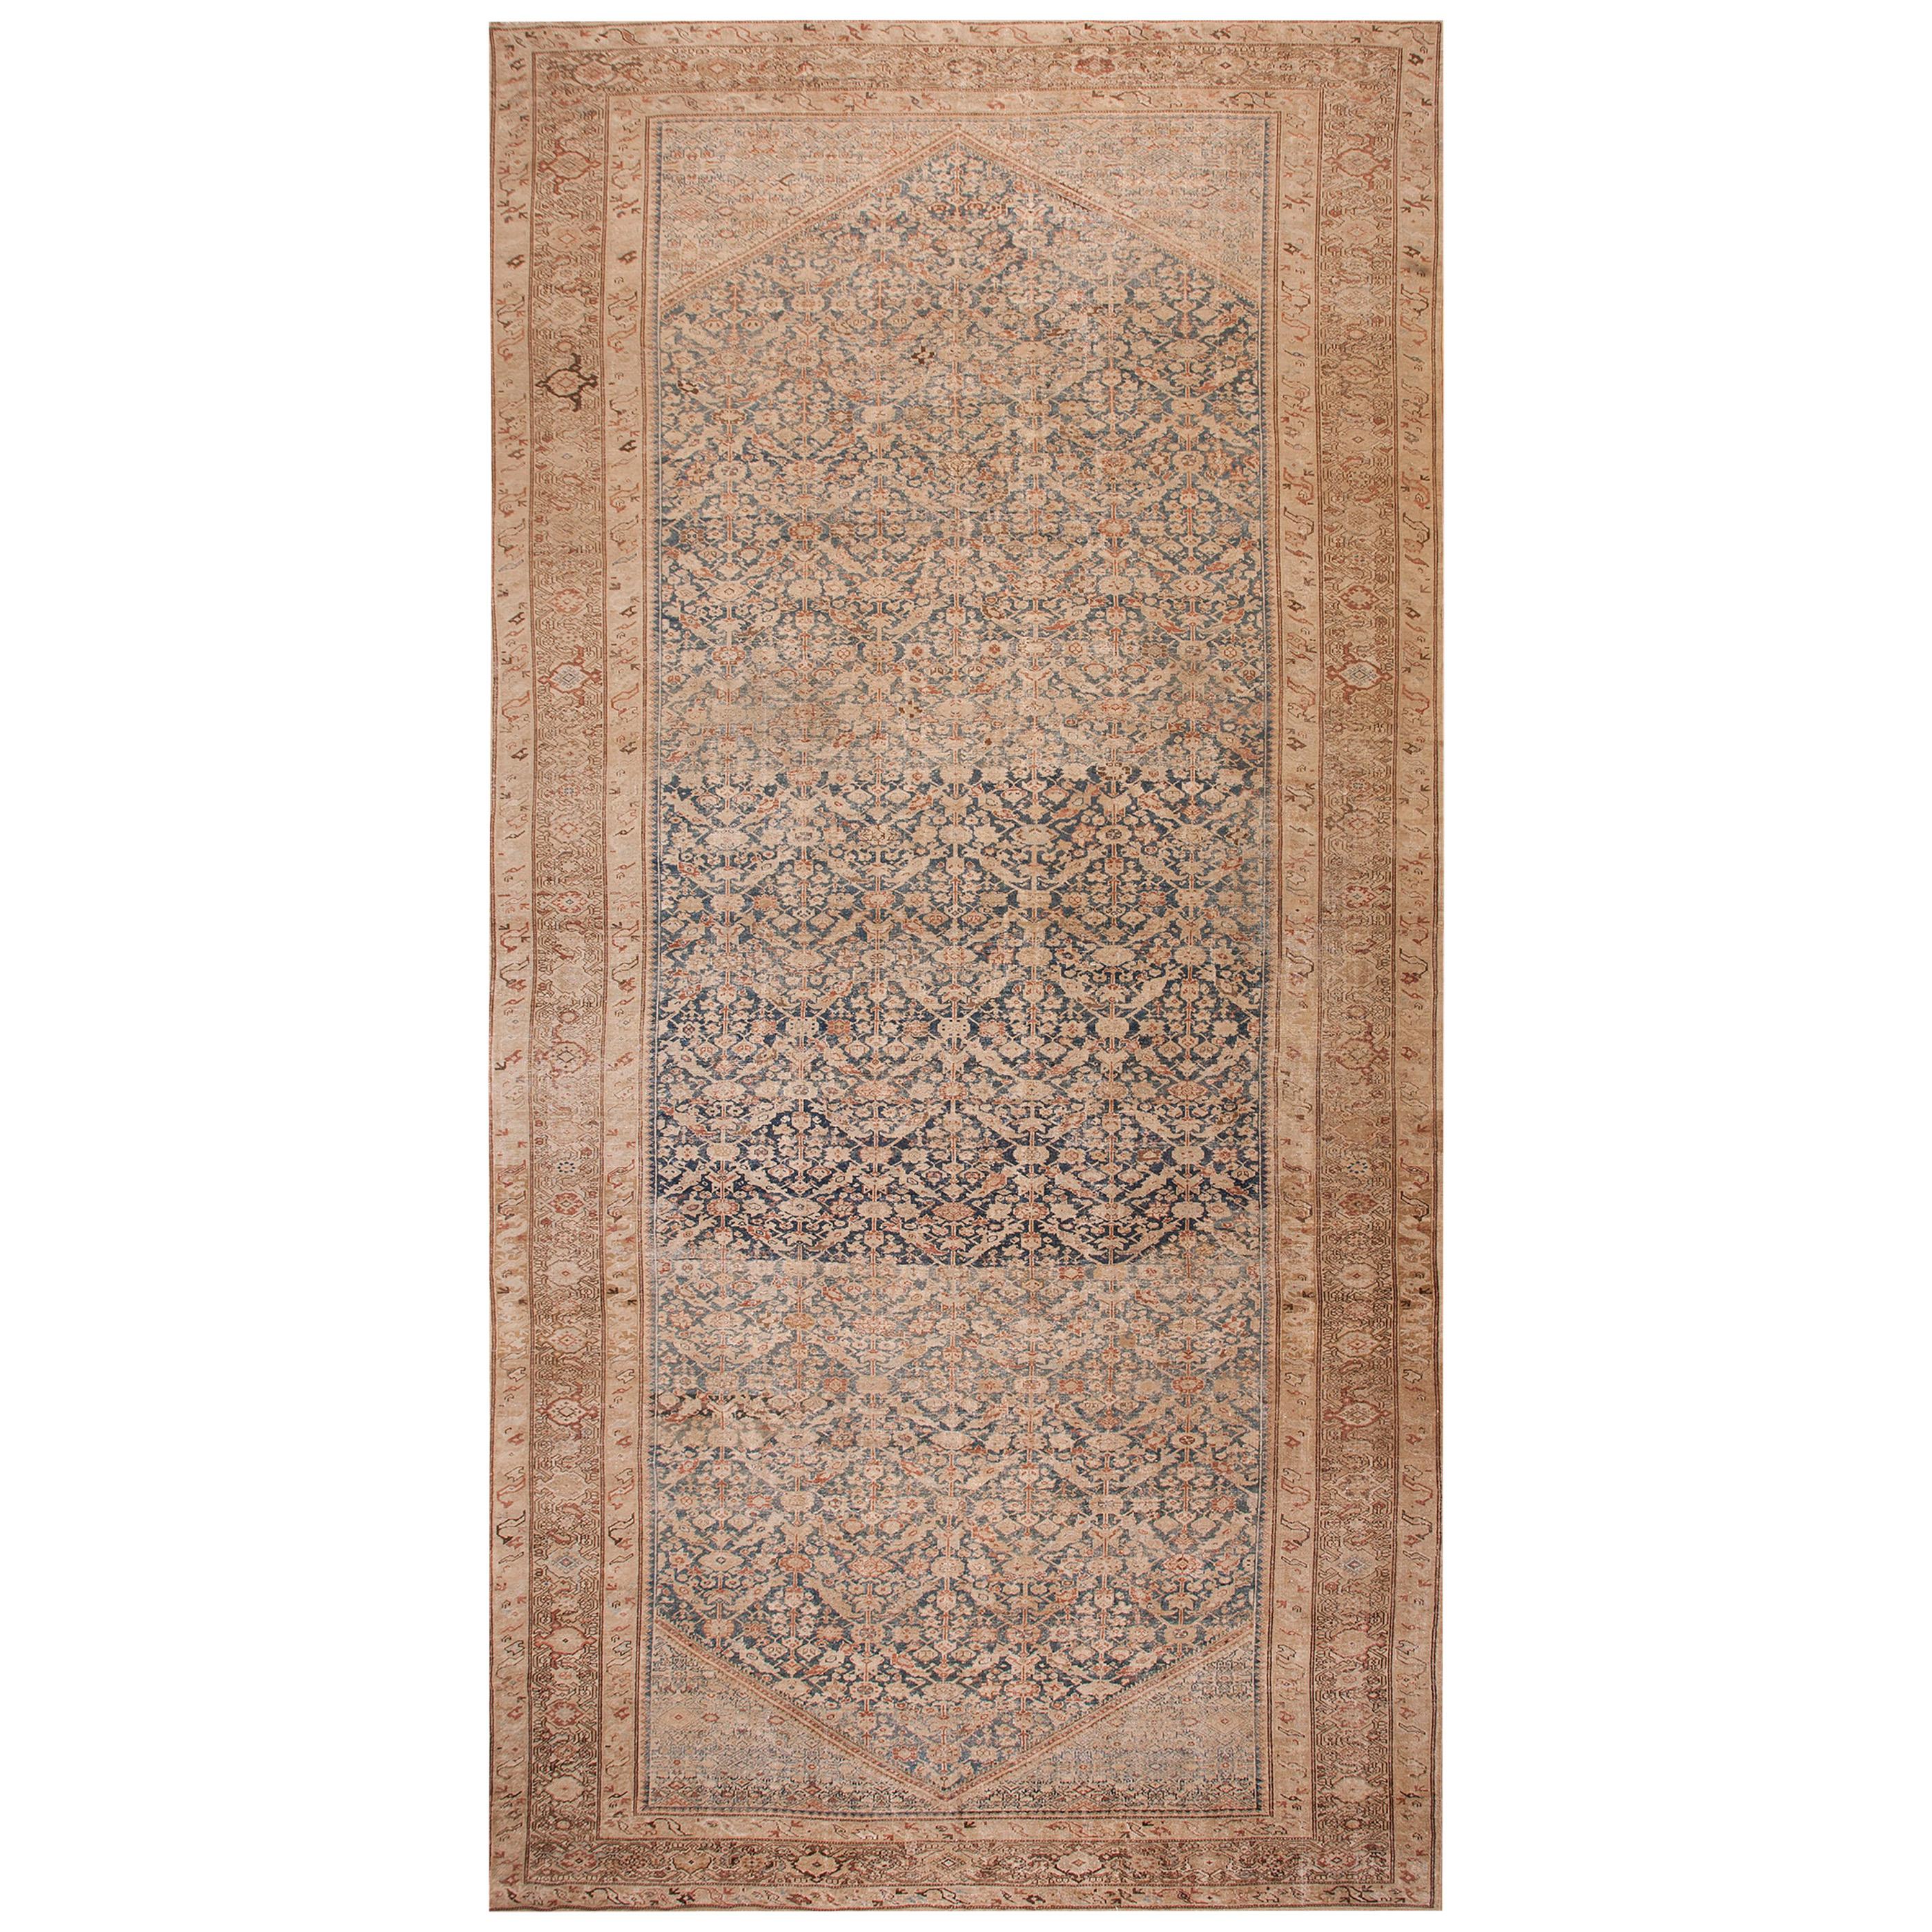 Early 20th Century Persian Malayer Carpet ( 10'3" x 20'9" - 312 x 632 )